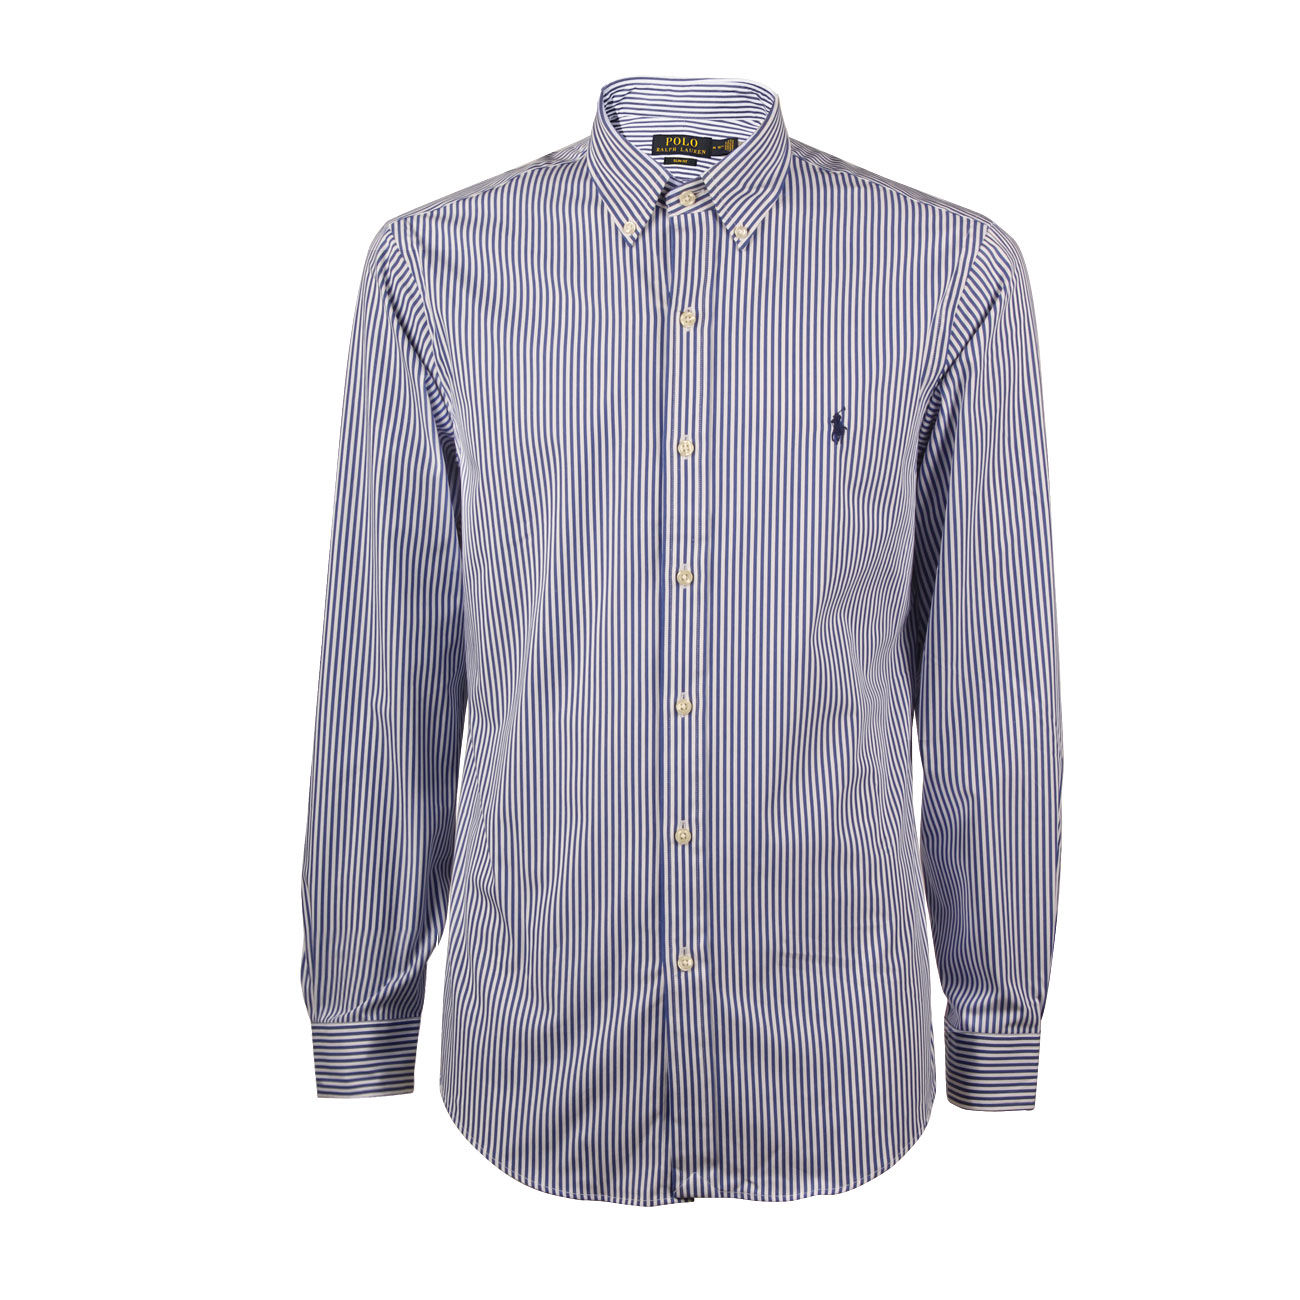 Polo Ralph Lauren SLIM FIT SHIRT - Formal shirt - light blue/white/blue 